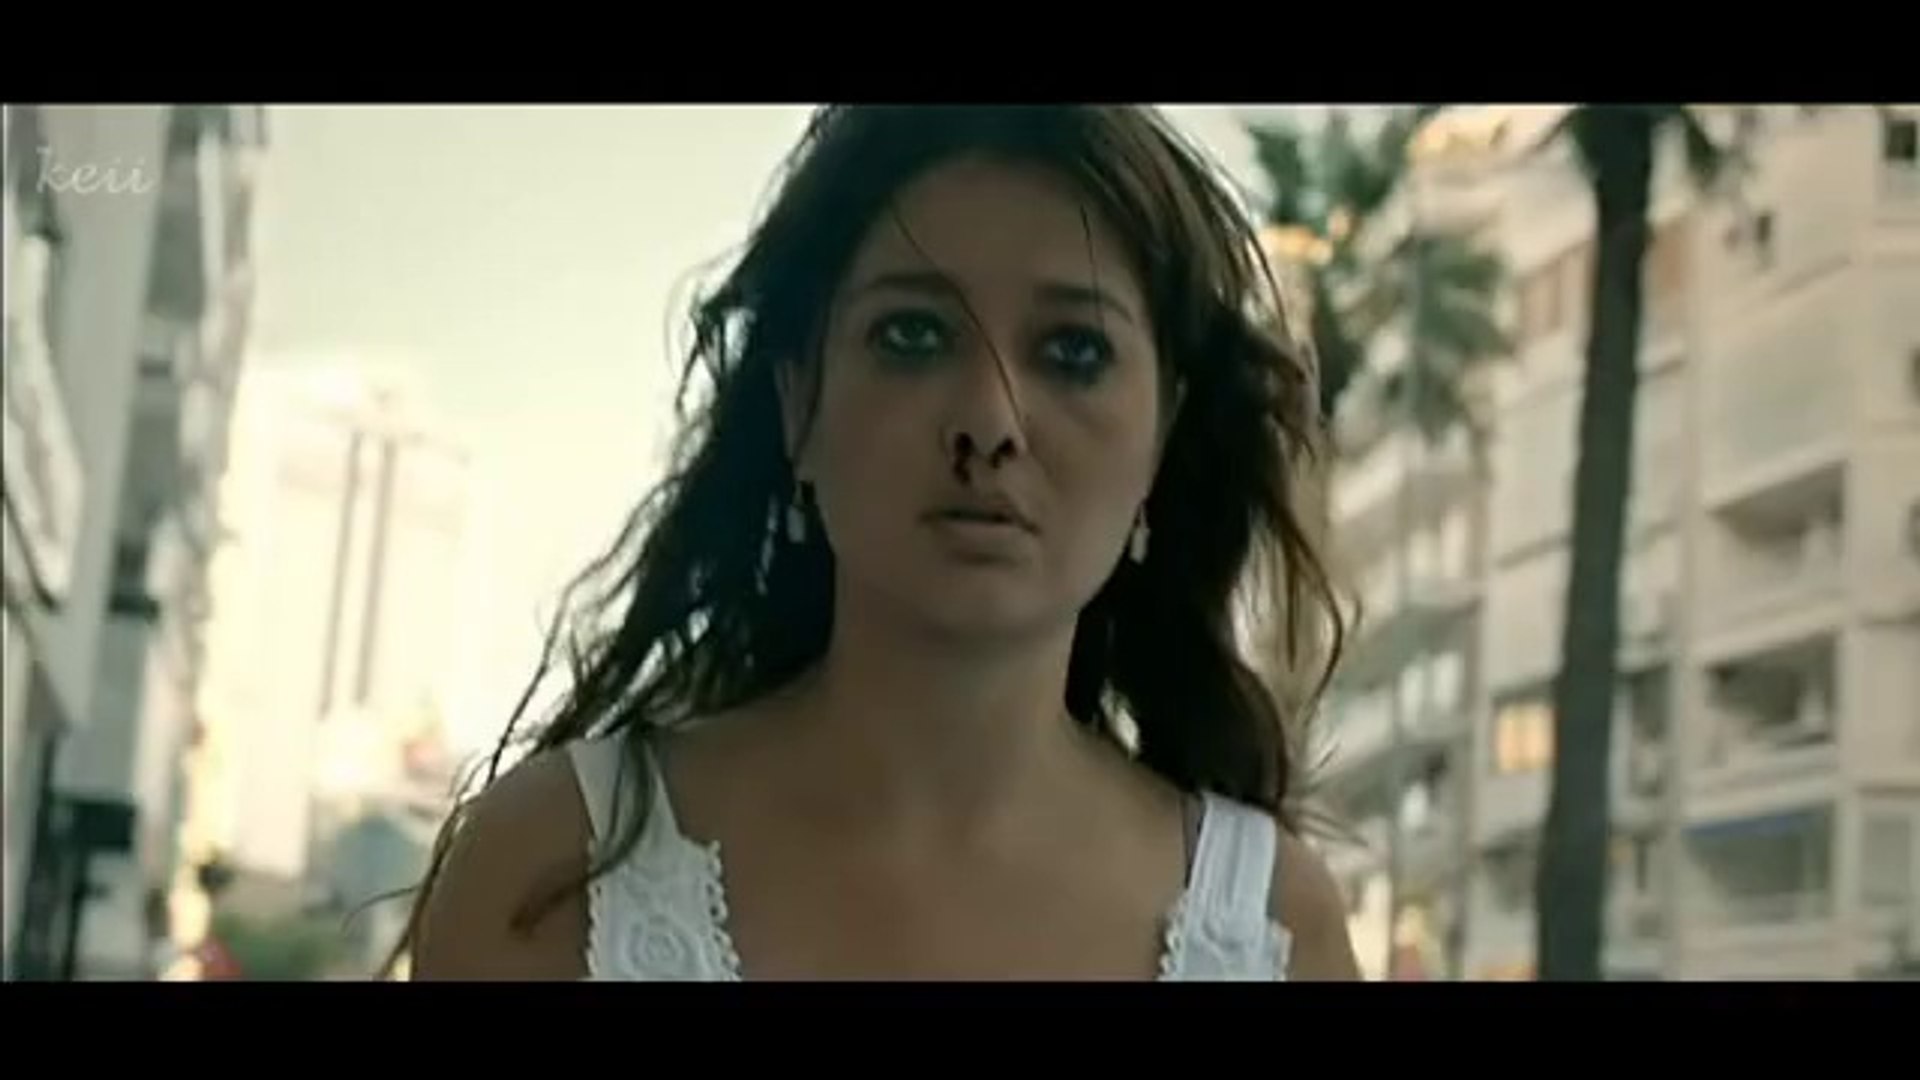 Nurgül Yesilçay in the movie "Gece" 2014 - video Dailymotion